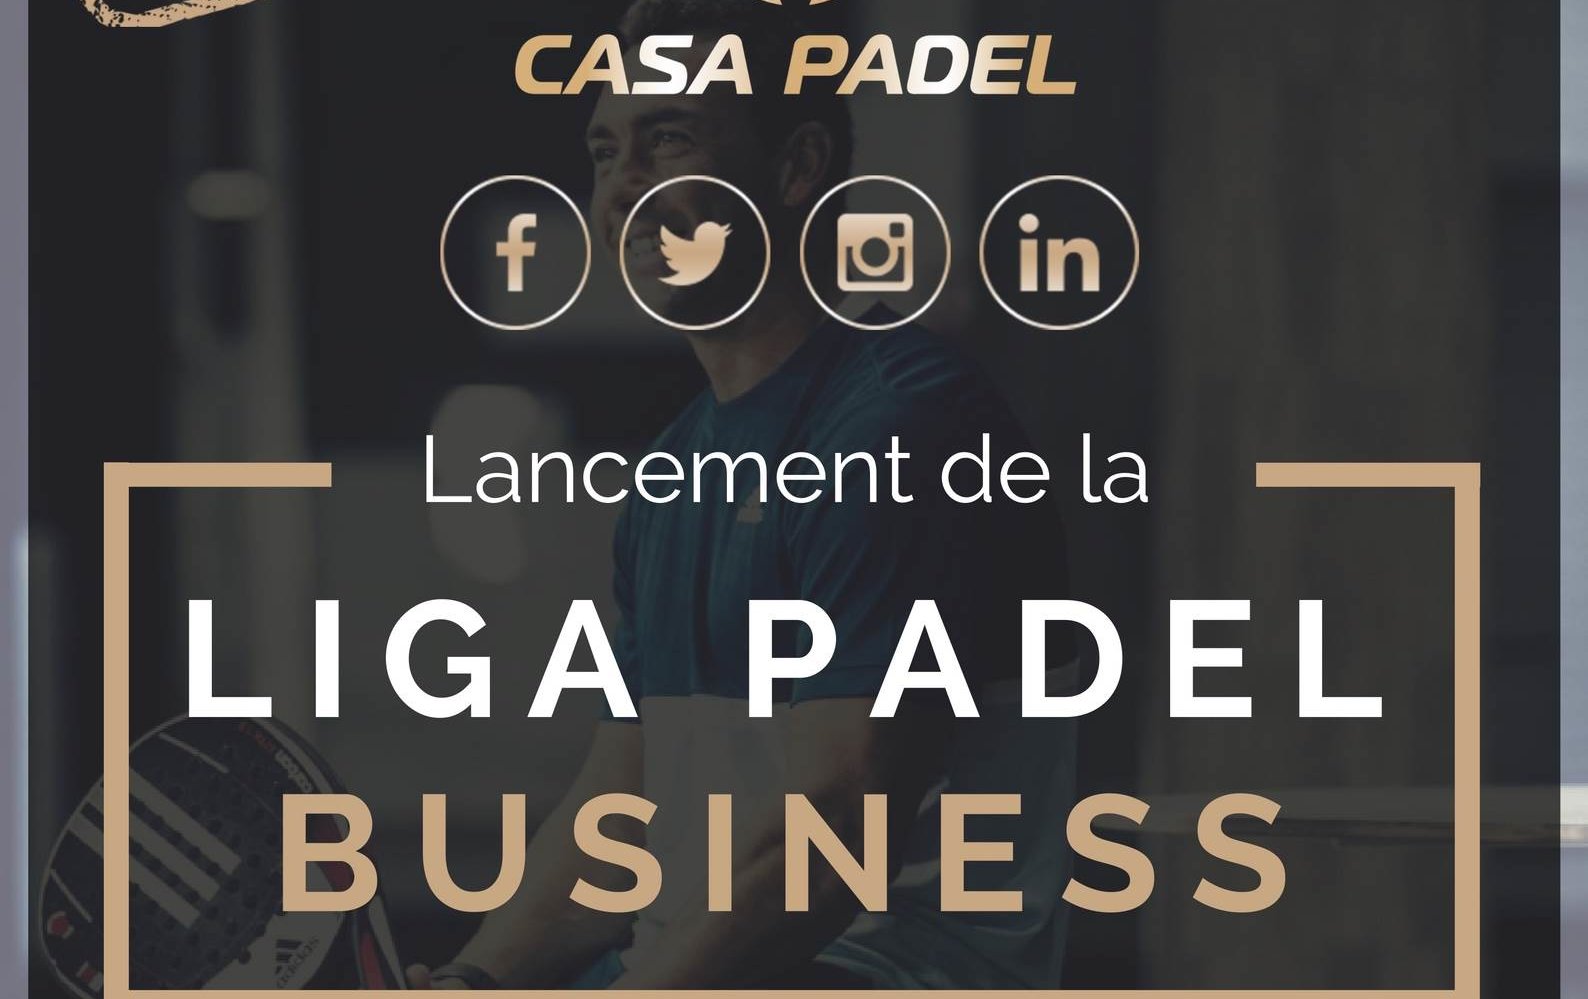 Home Padel launches LIGA PADEL BUSINESS